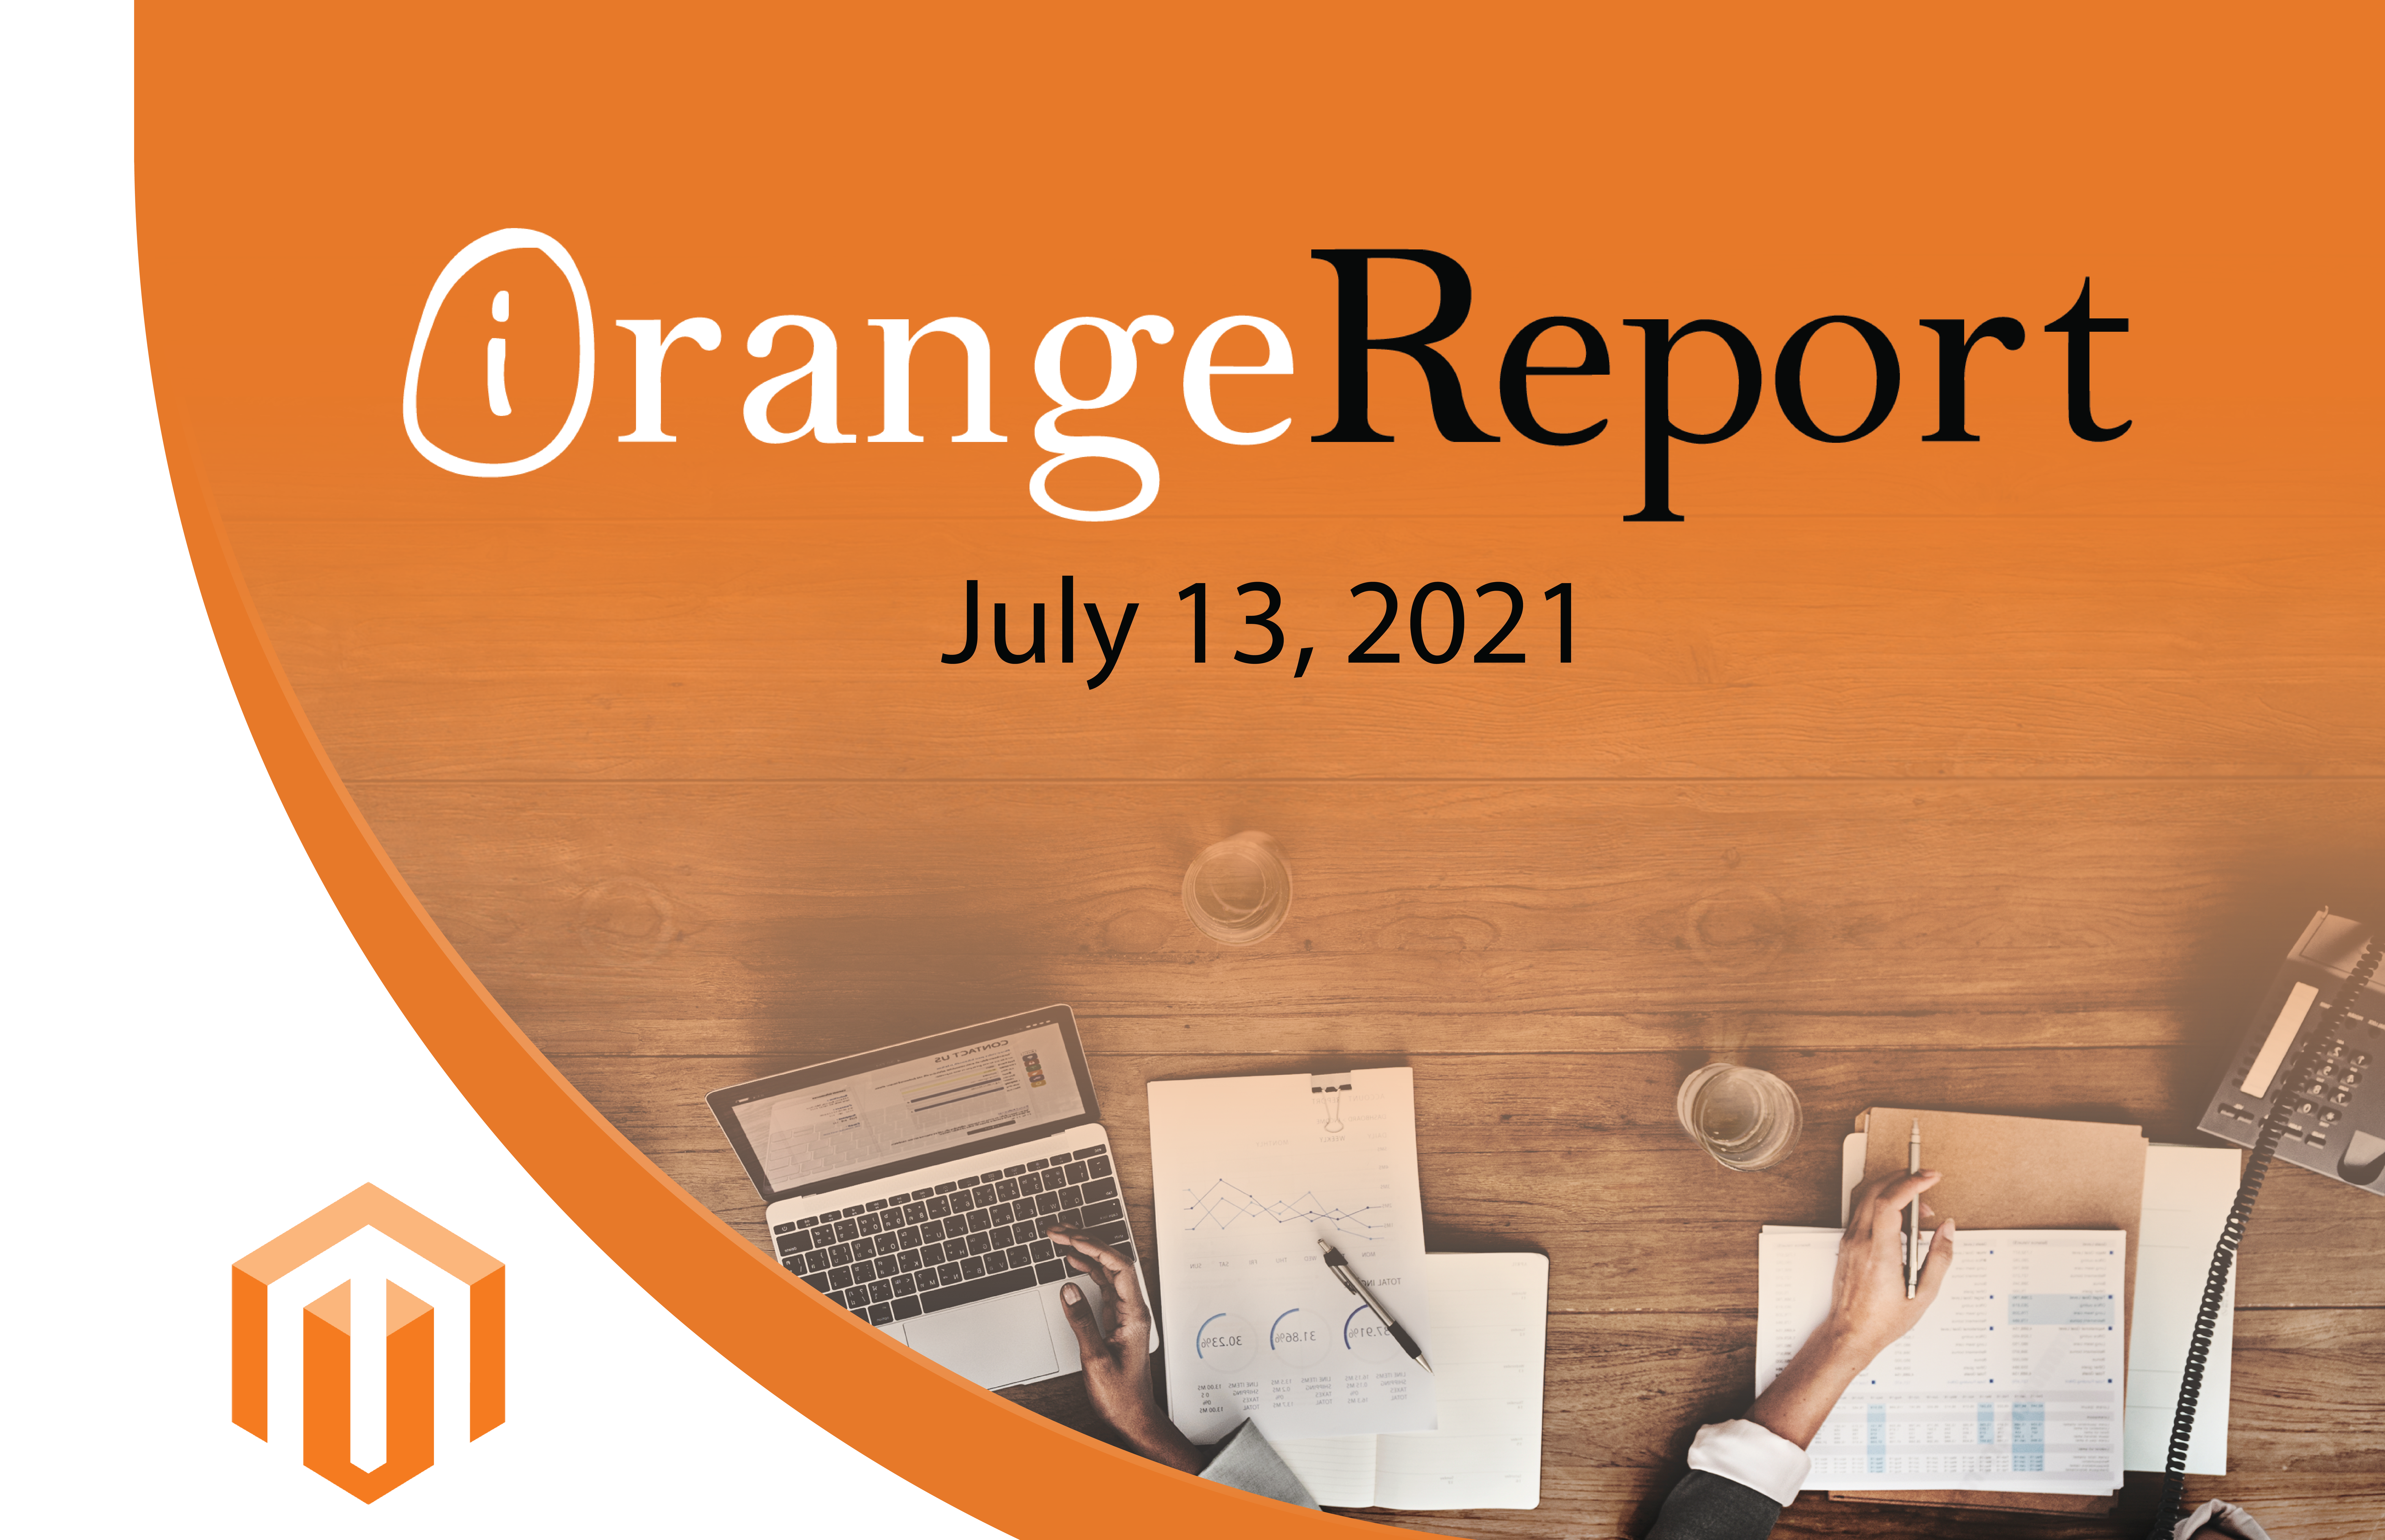 The July 2021 Orange Report